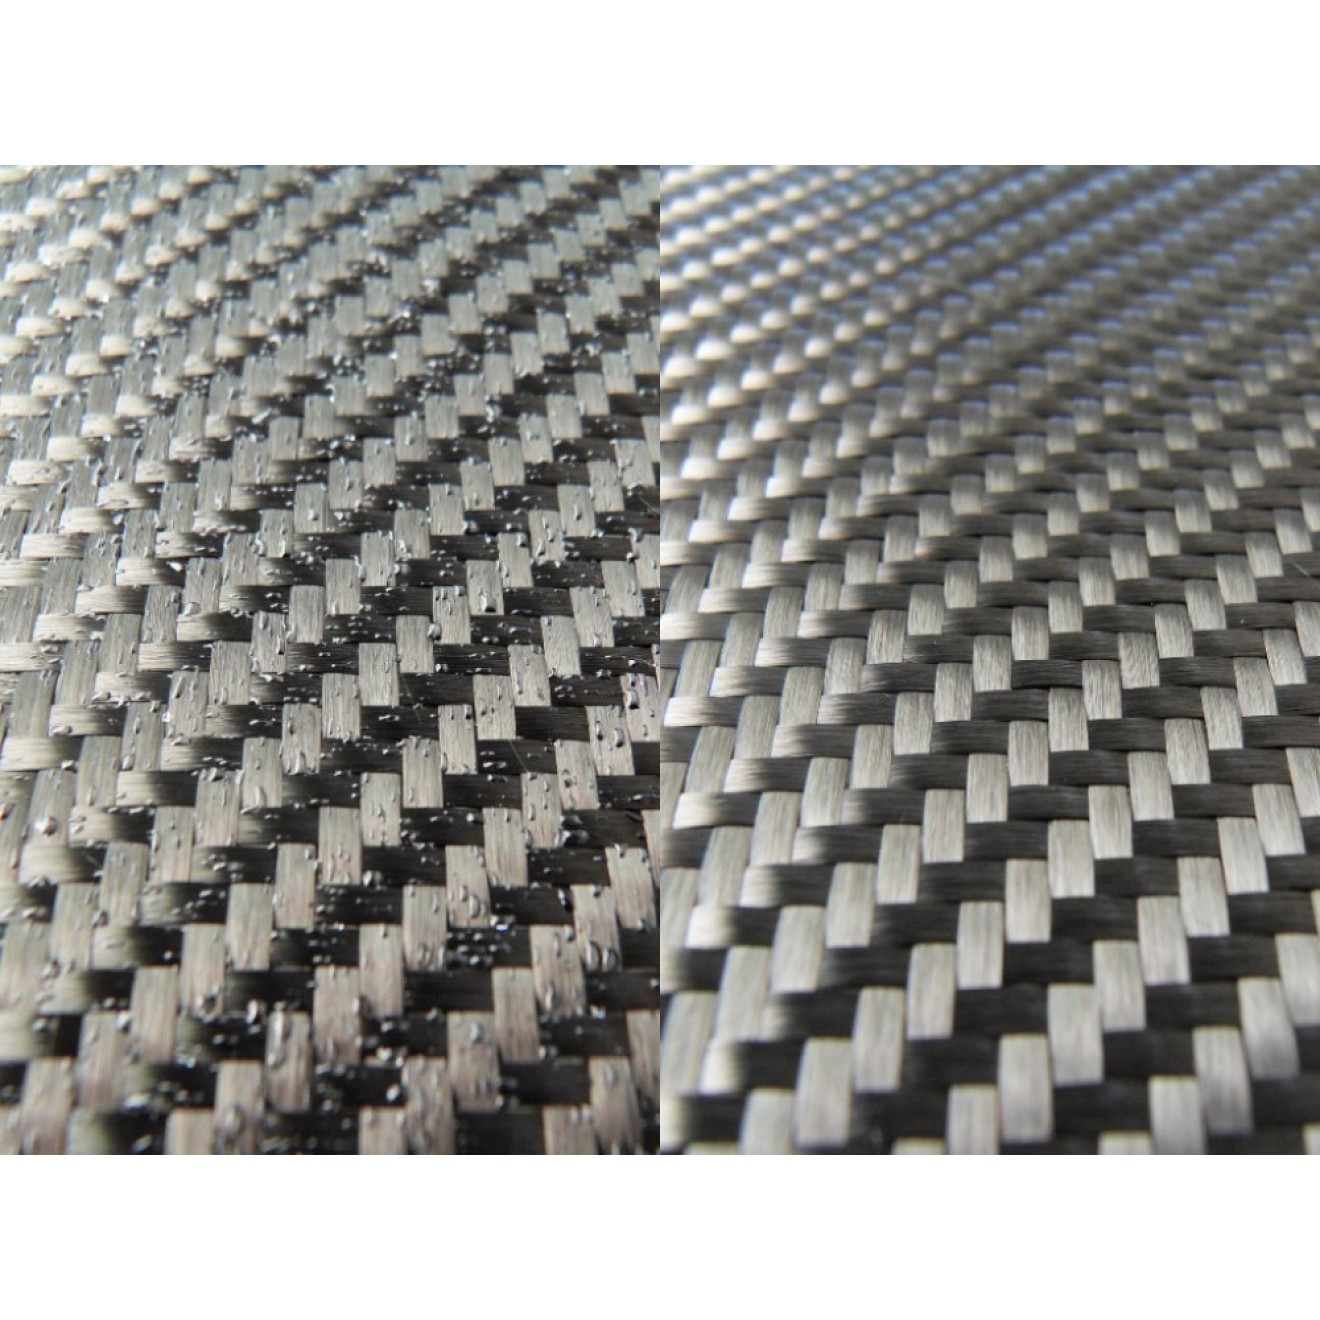 Woven carbon fiber fabric 3K 245g/m², EP-Powdered, width 100cm